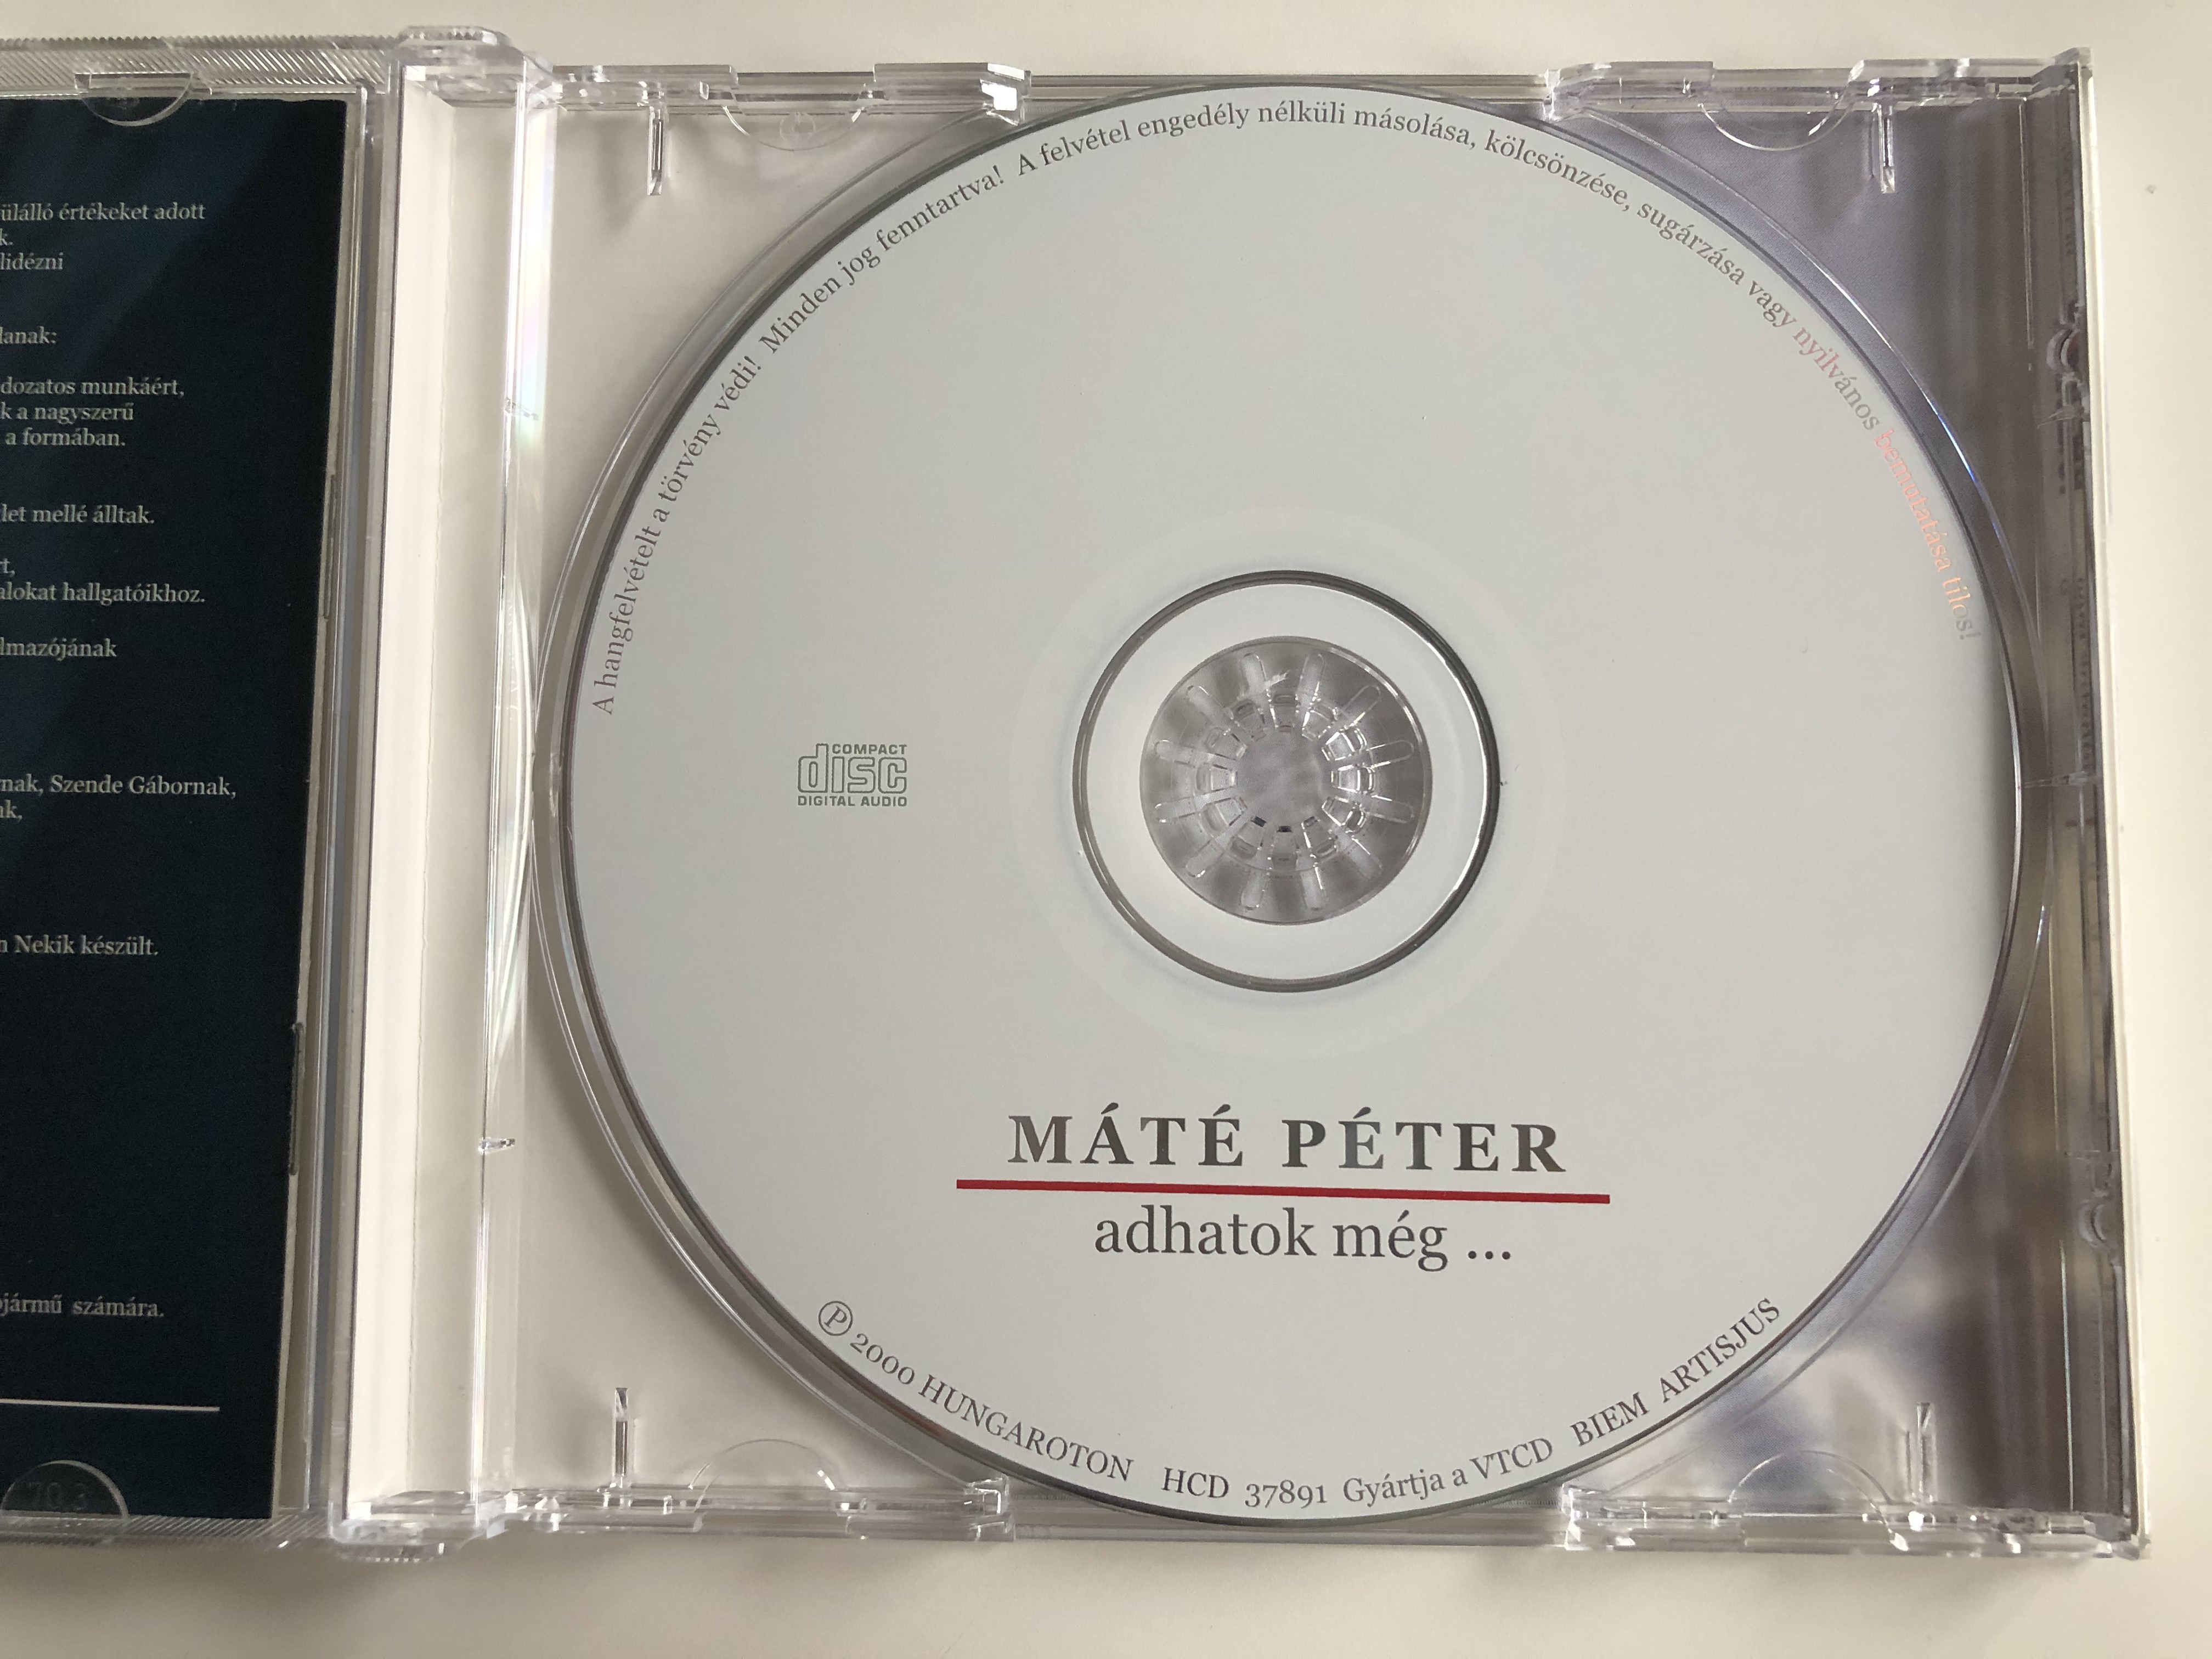 mate-peter-adhatok-meg...-mate-peter-eredeti-enekhangja-uj-hangszerelessel-hungaroton-audio-cd-2000-hcd-37891-8-.jpg